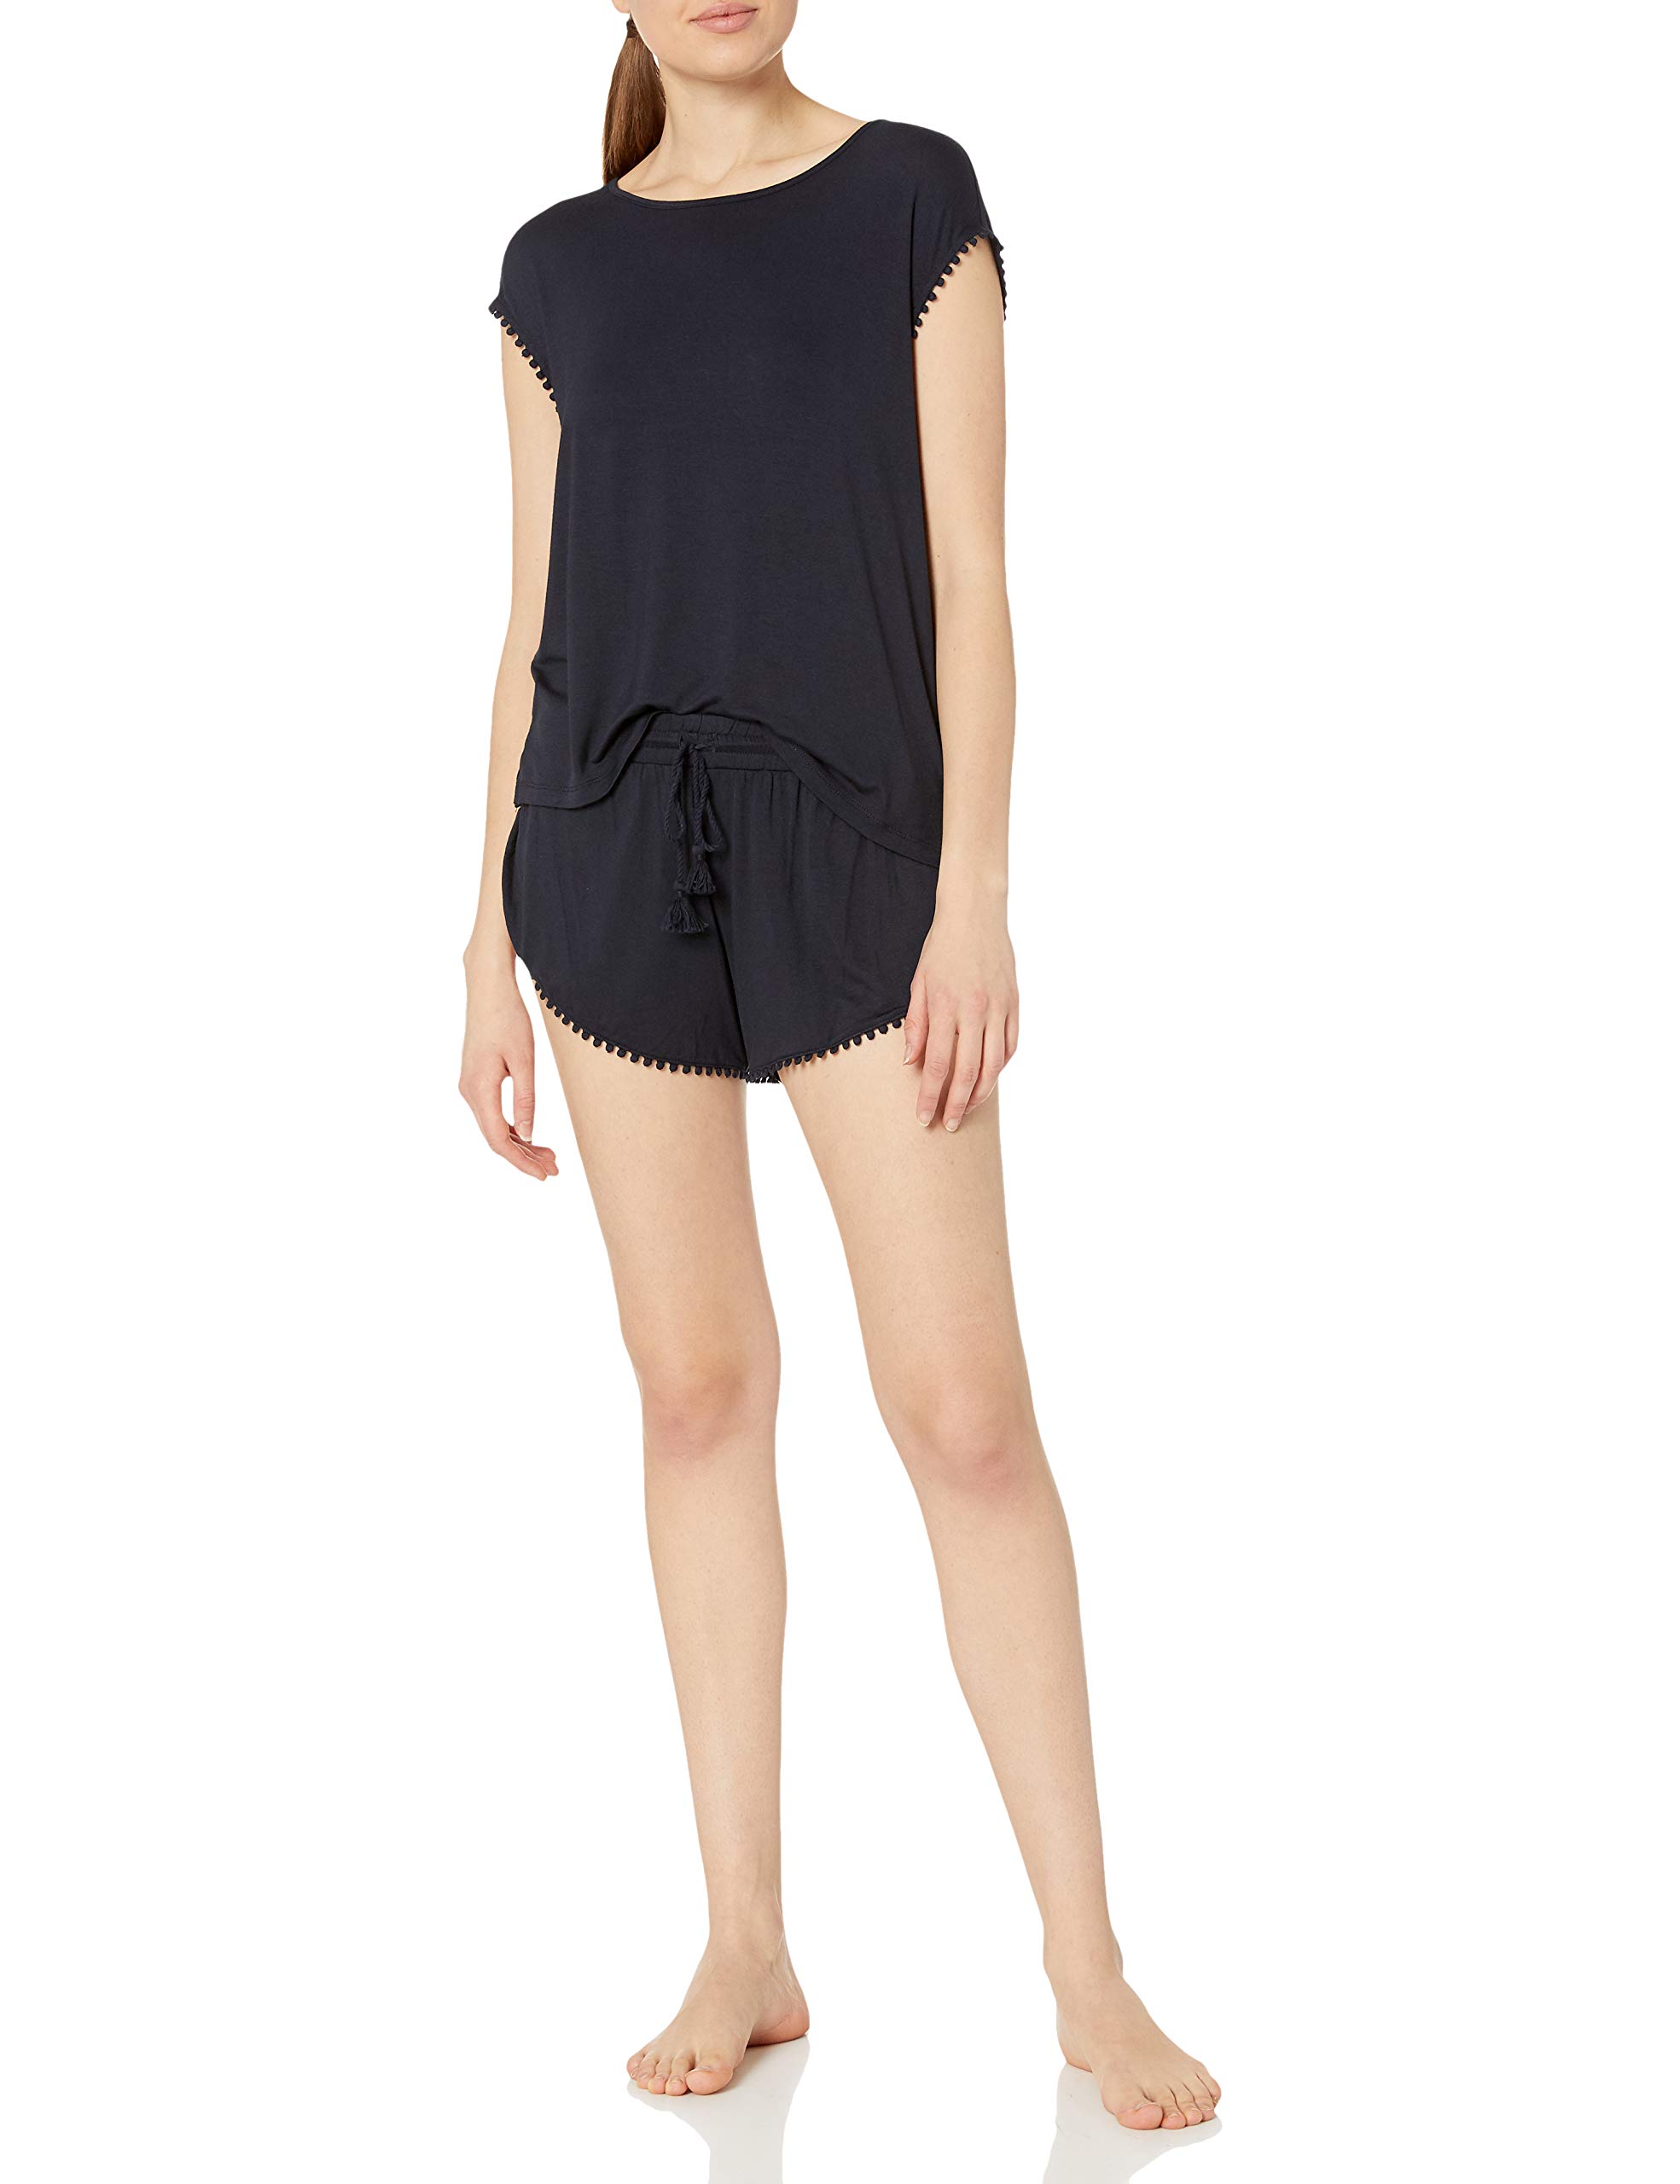 Book Cover Amazon Brand - Mae Women's Sleepwear Curved Trim T Shirt and Short Pajama Set